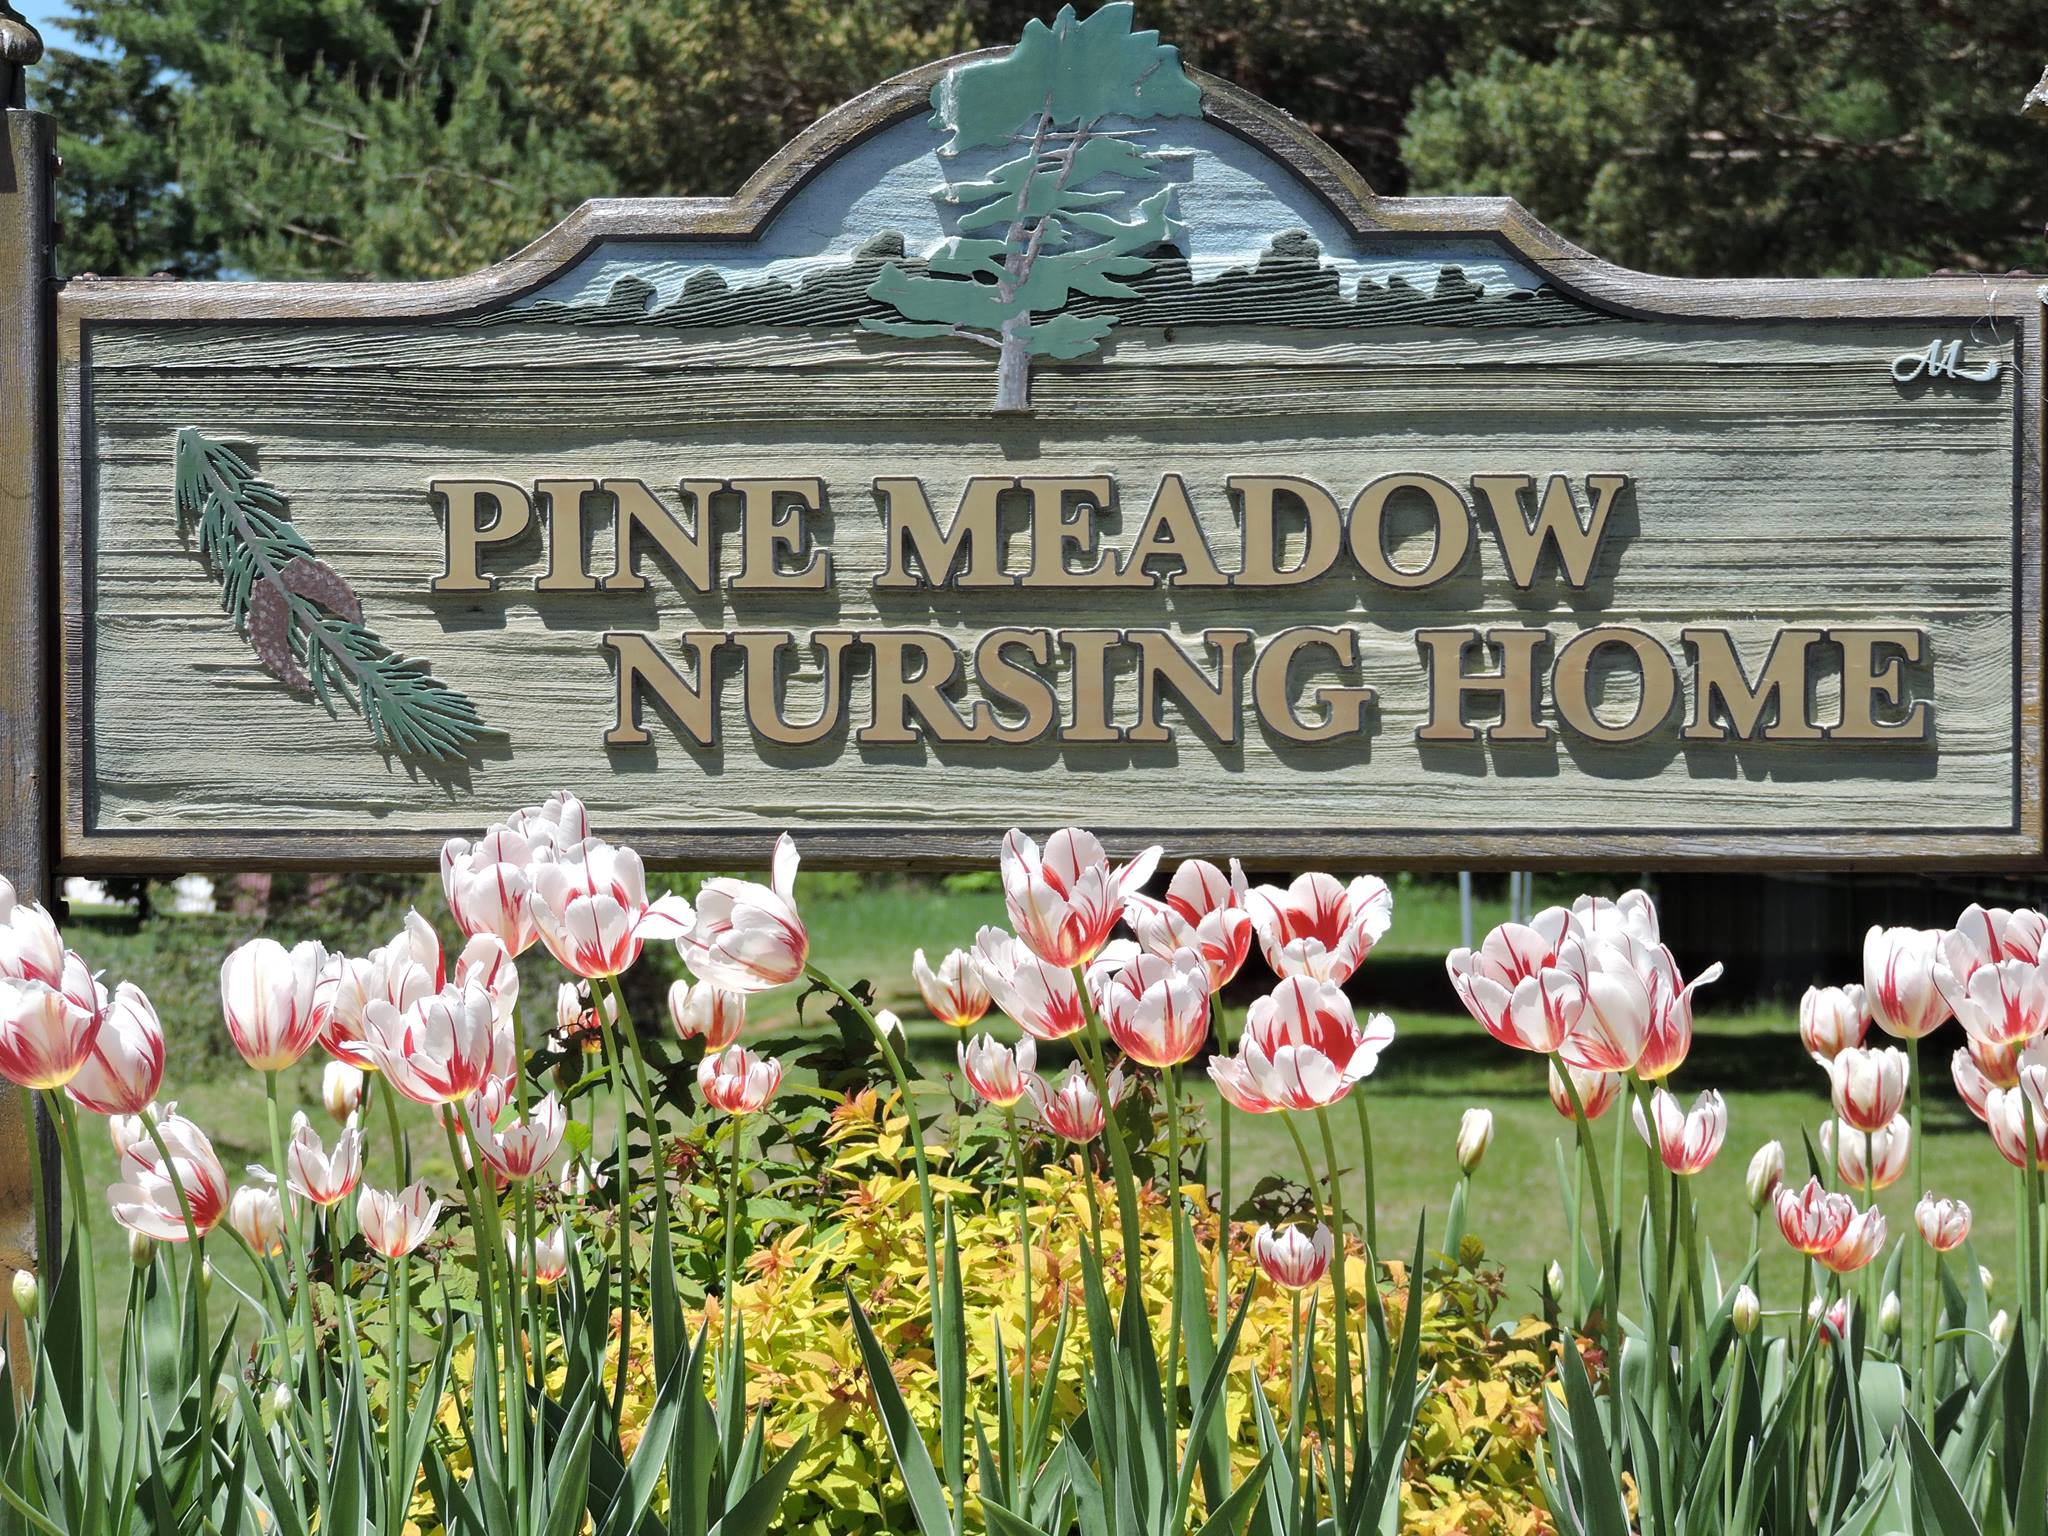 Pine Meadow Nursing Home, Northbrook, Ontario